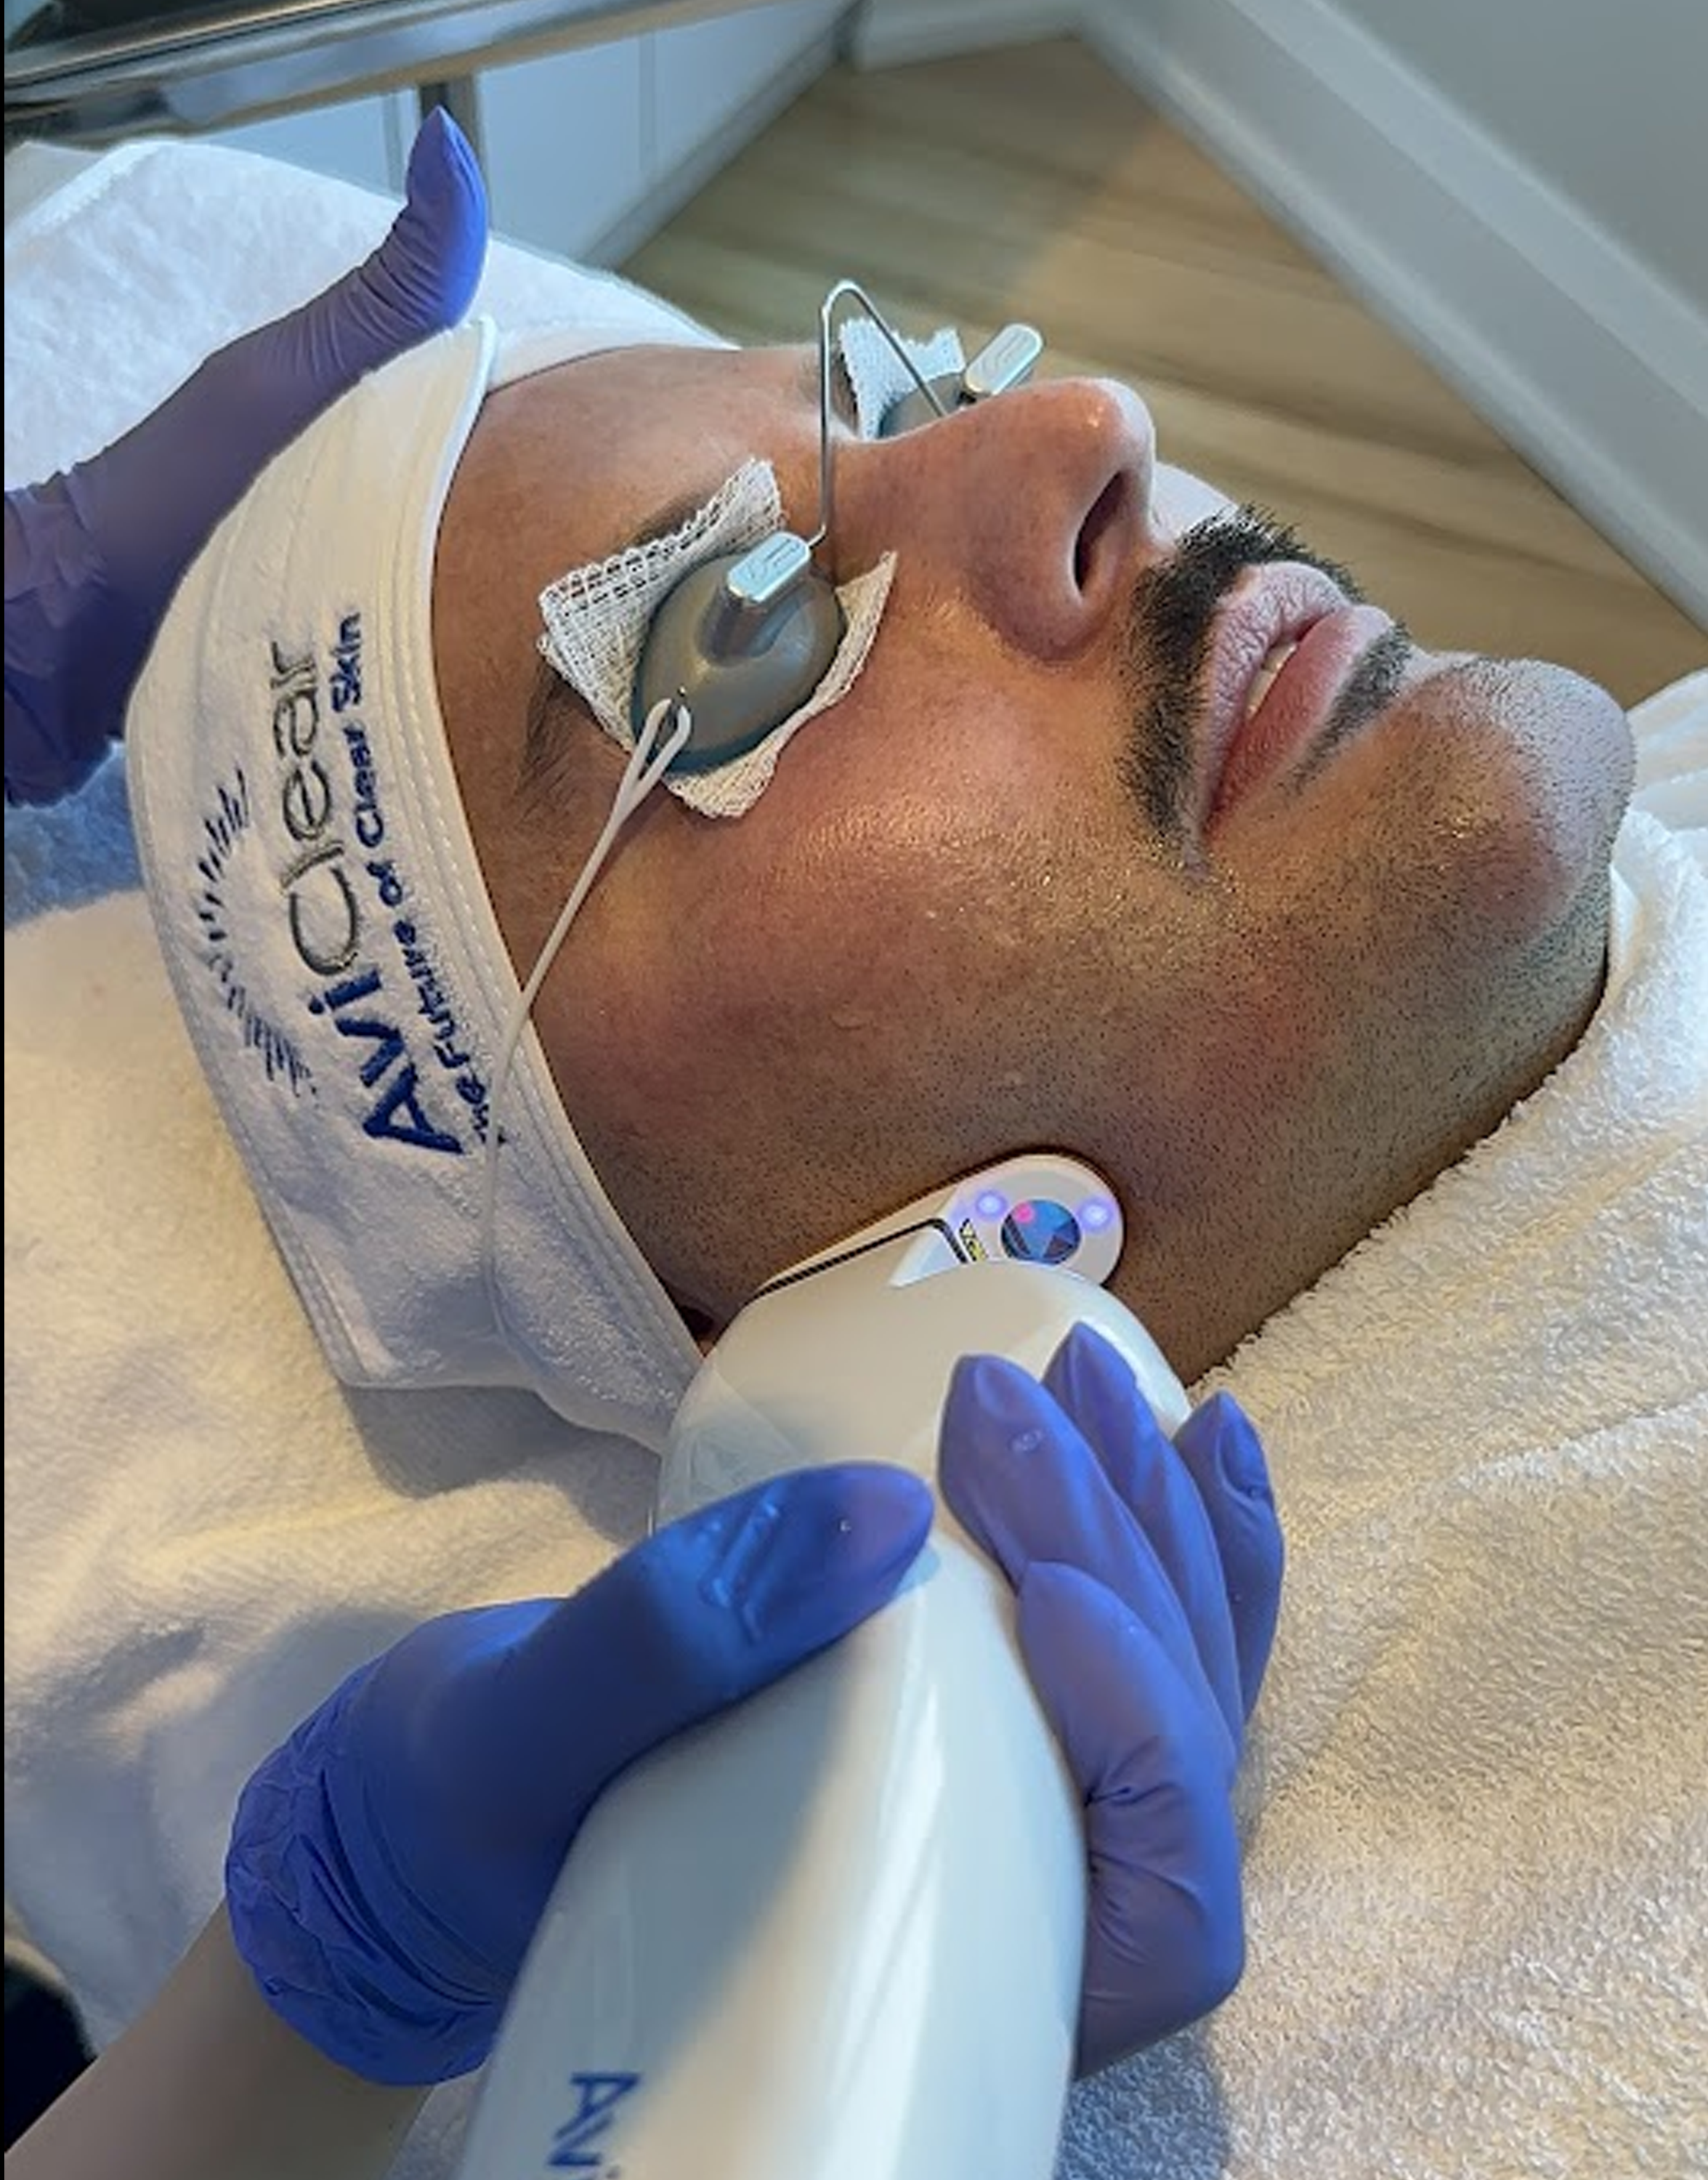 John-Paul Ricchio Receiving AviClear Acne Treatment at Lip Doctor